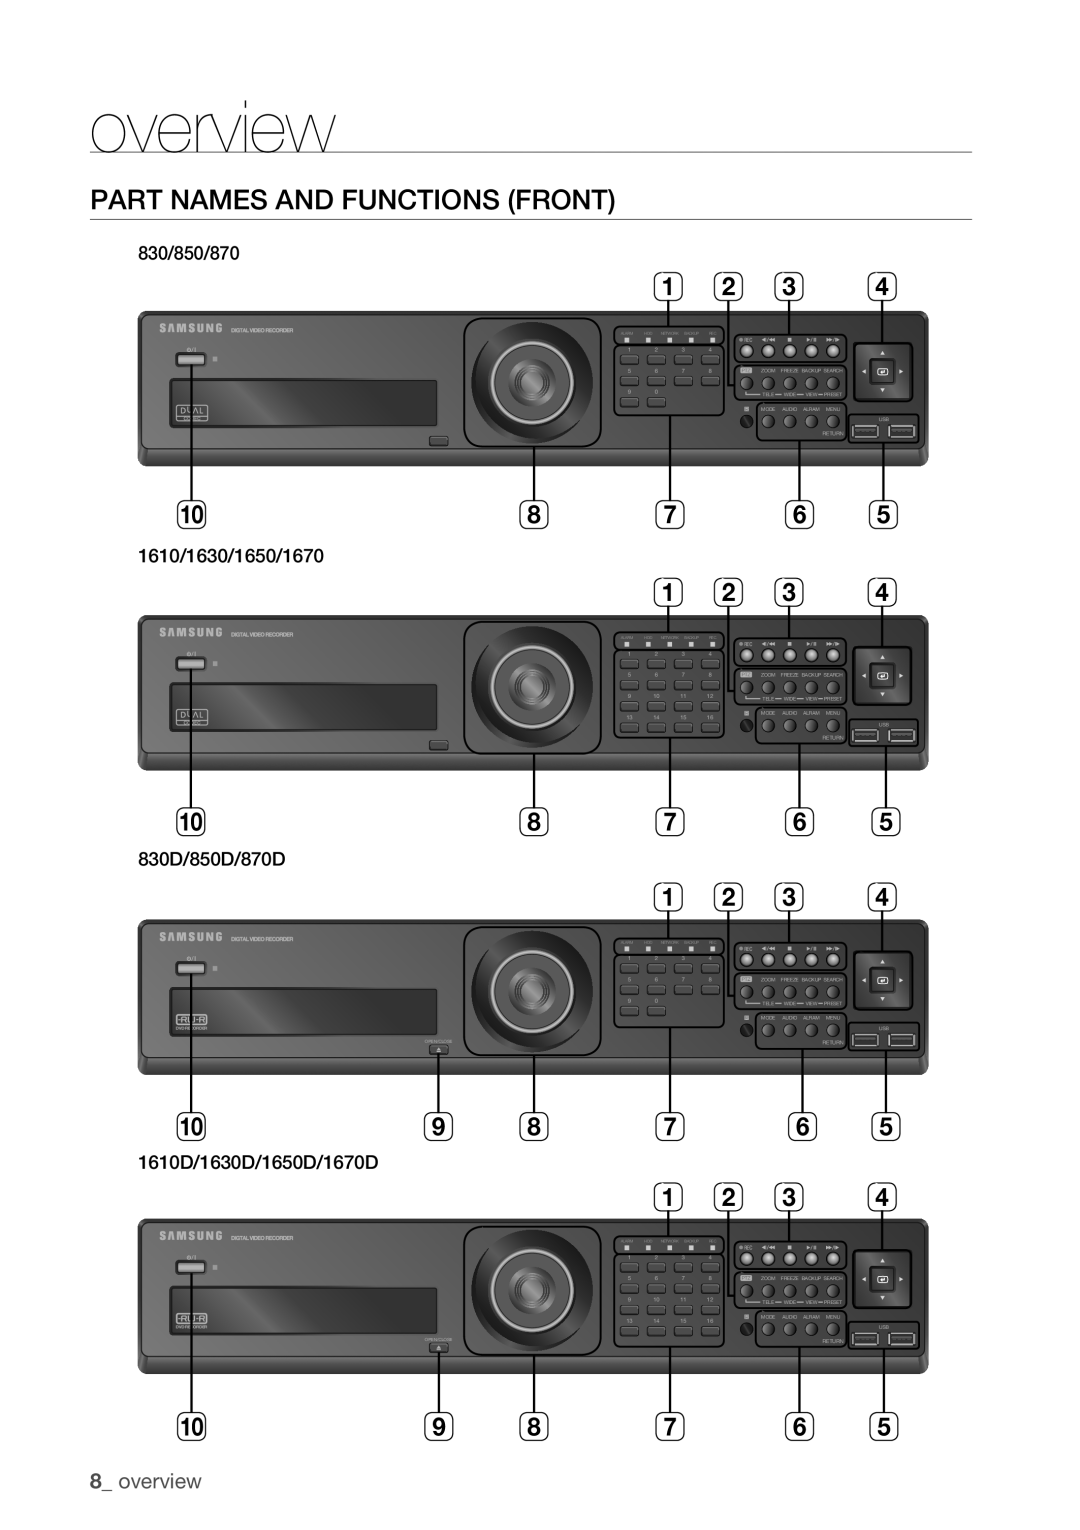 Samsung SRD-1650D, 1670D Part Names and Functions Front,  overview, 830/850/870, 1610/1630/1650/1670, 830D/850D/870D 